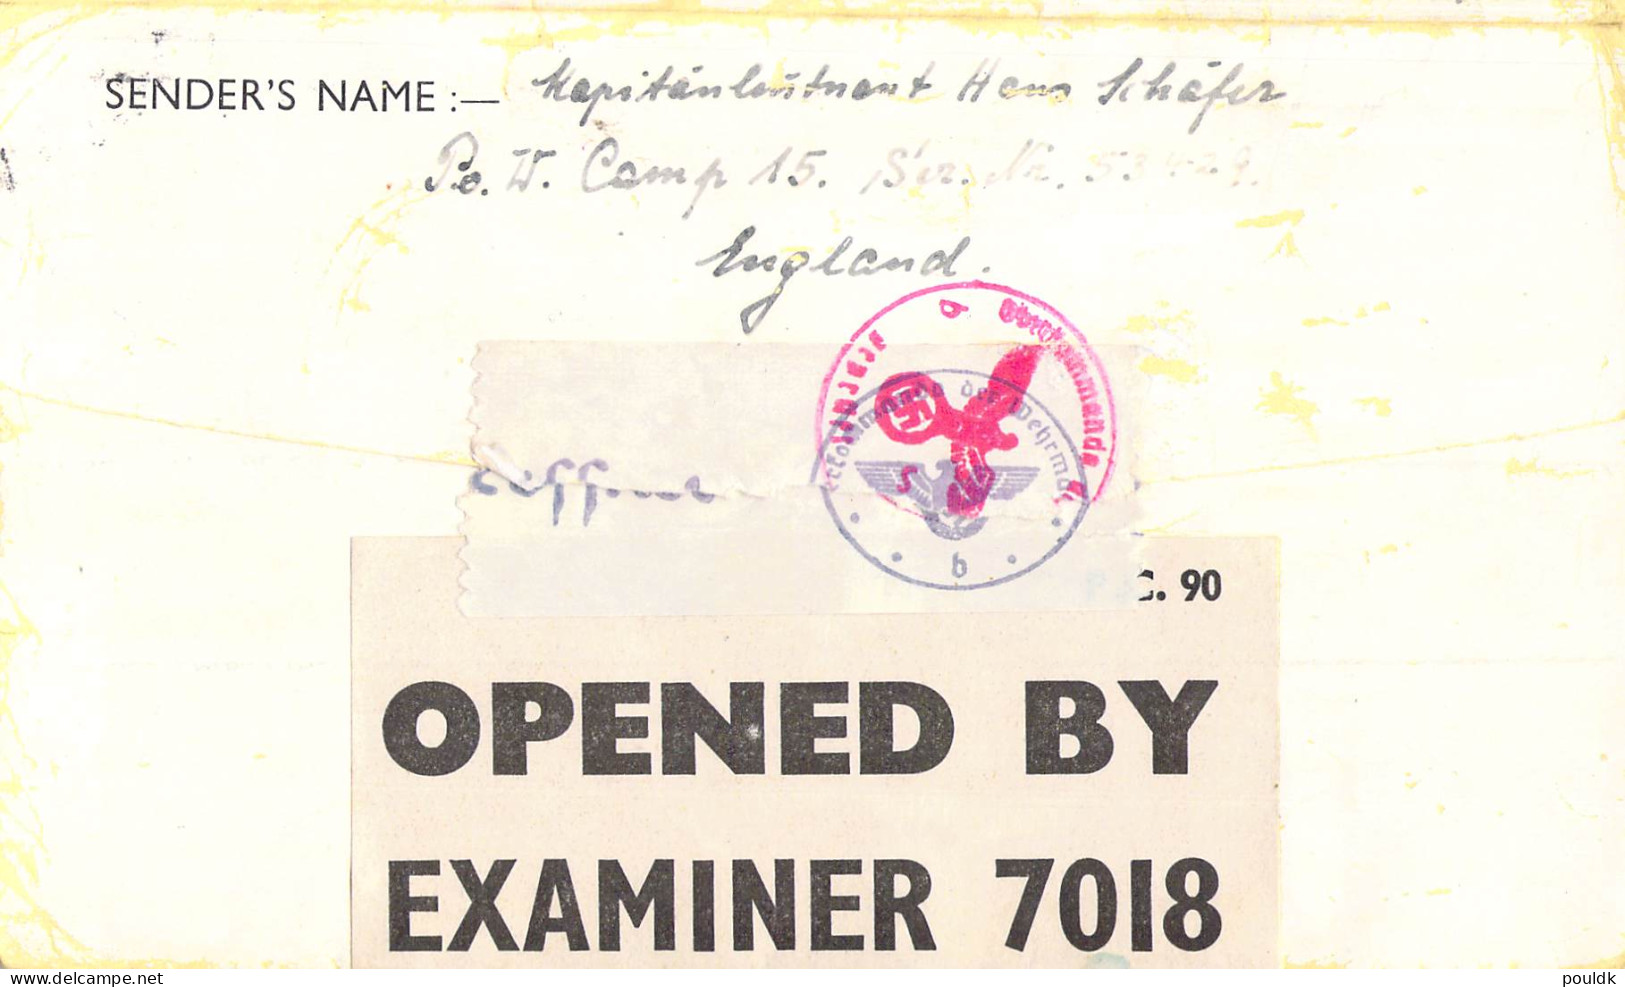 Ten German Prisoner of War letters from Kapitänleutenant belived to be Submarine U-556 First Leutenant, writing